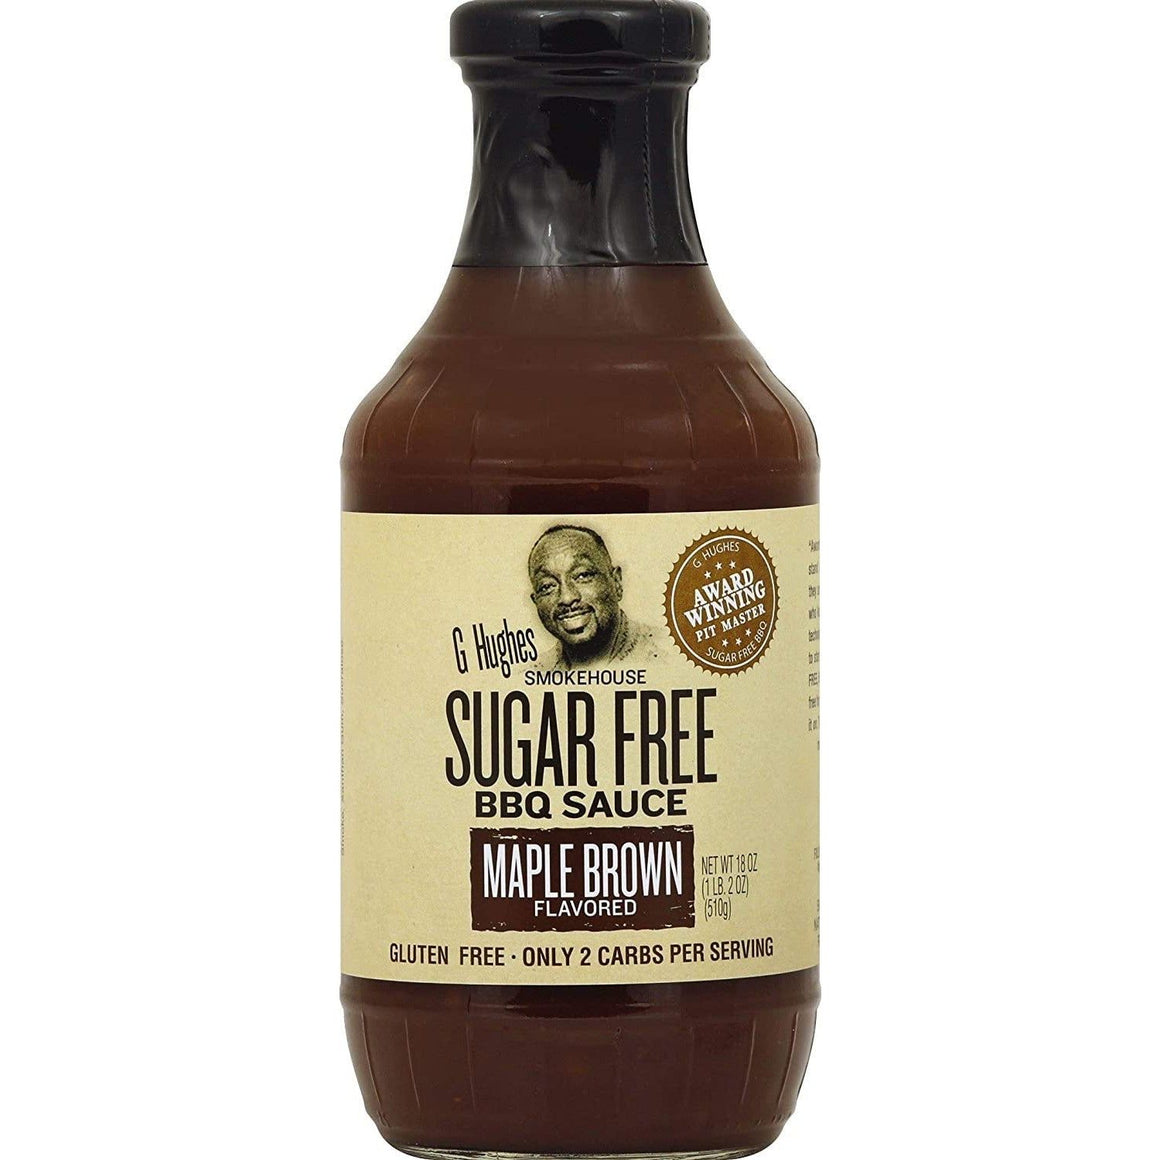 G Hughes Smokehouse - Sugar Free BBQ Sauce - Maple Brown - 18 oz.